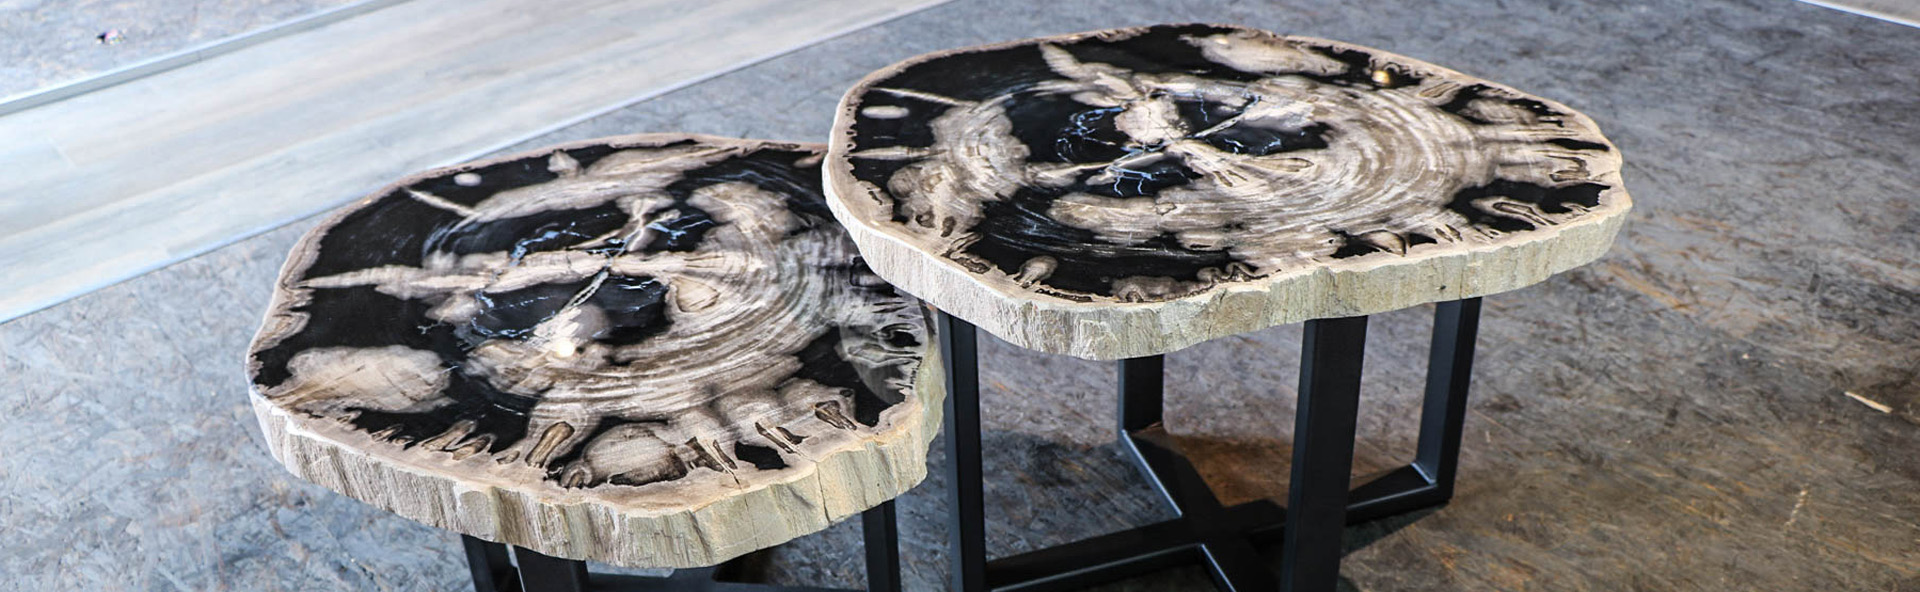 Petrified wood tables